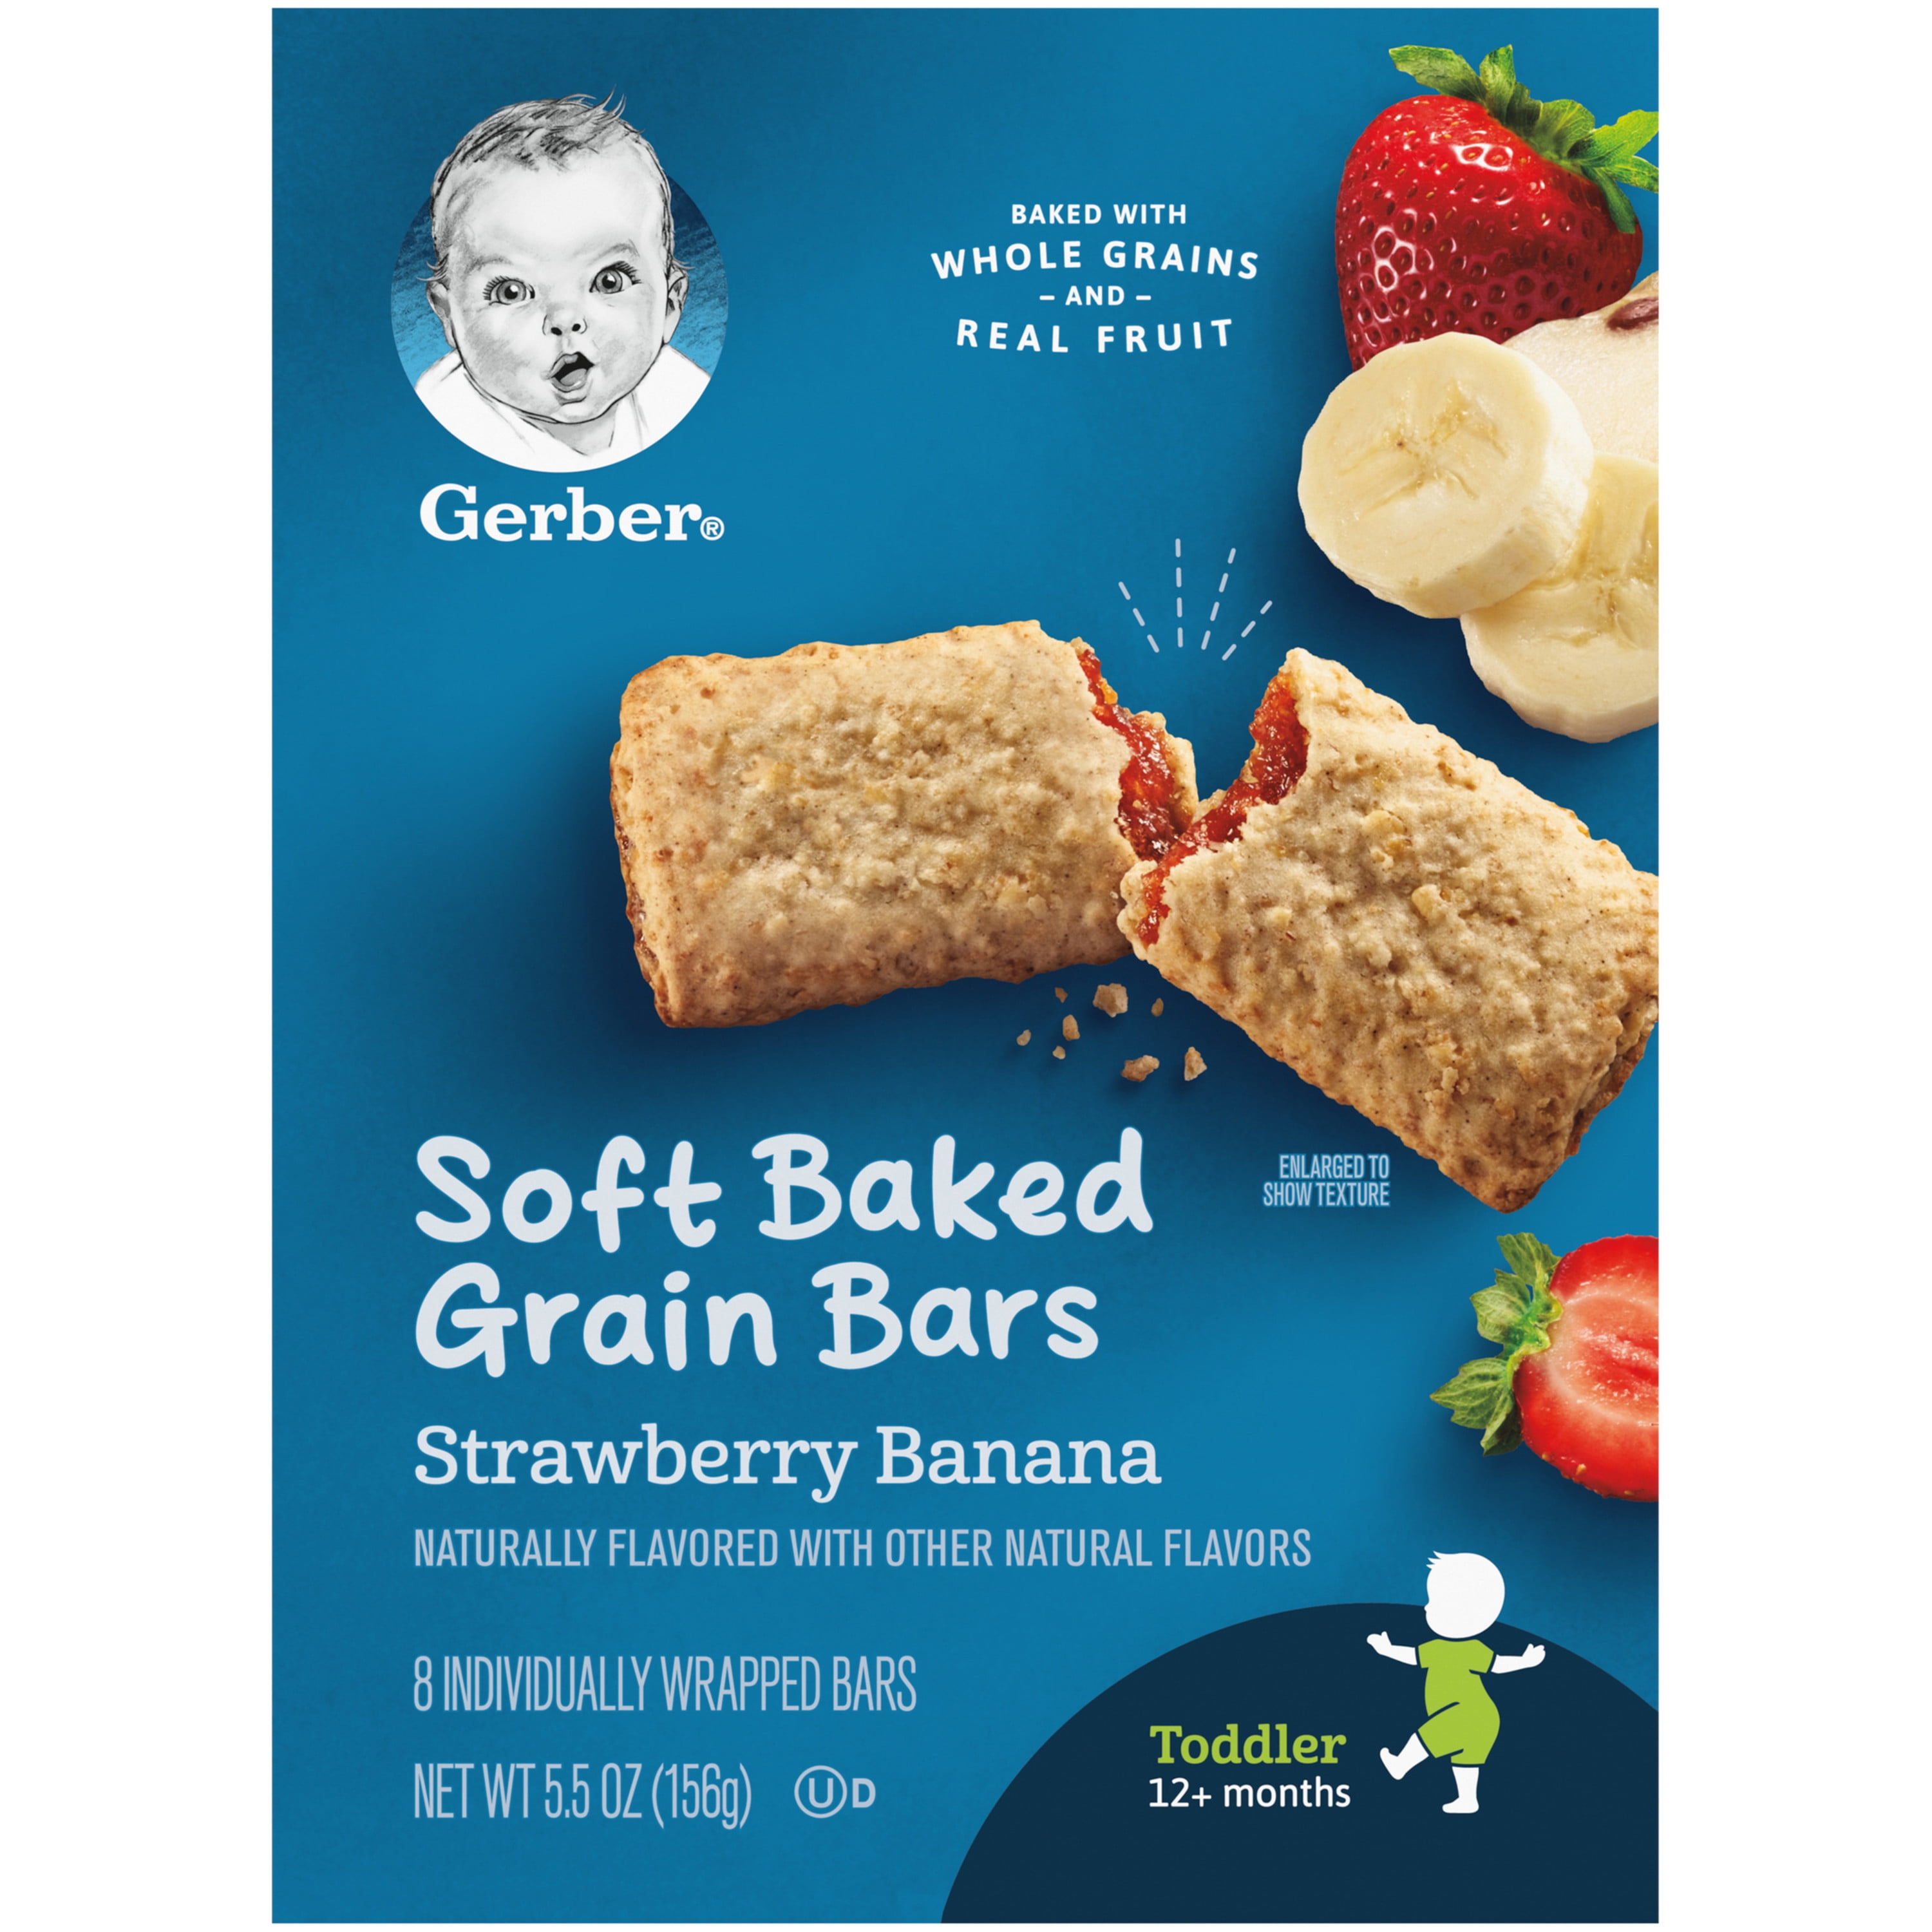 Gerber Soft Baked Grain Bars, Strawberry Banana, 5.5 oz Box